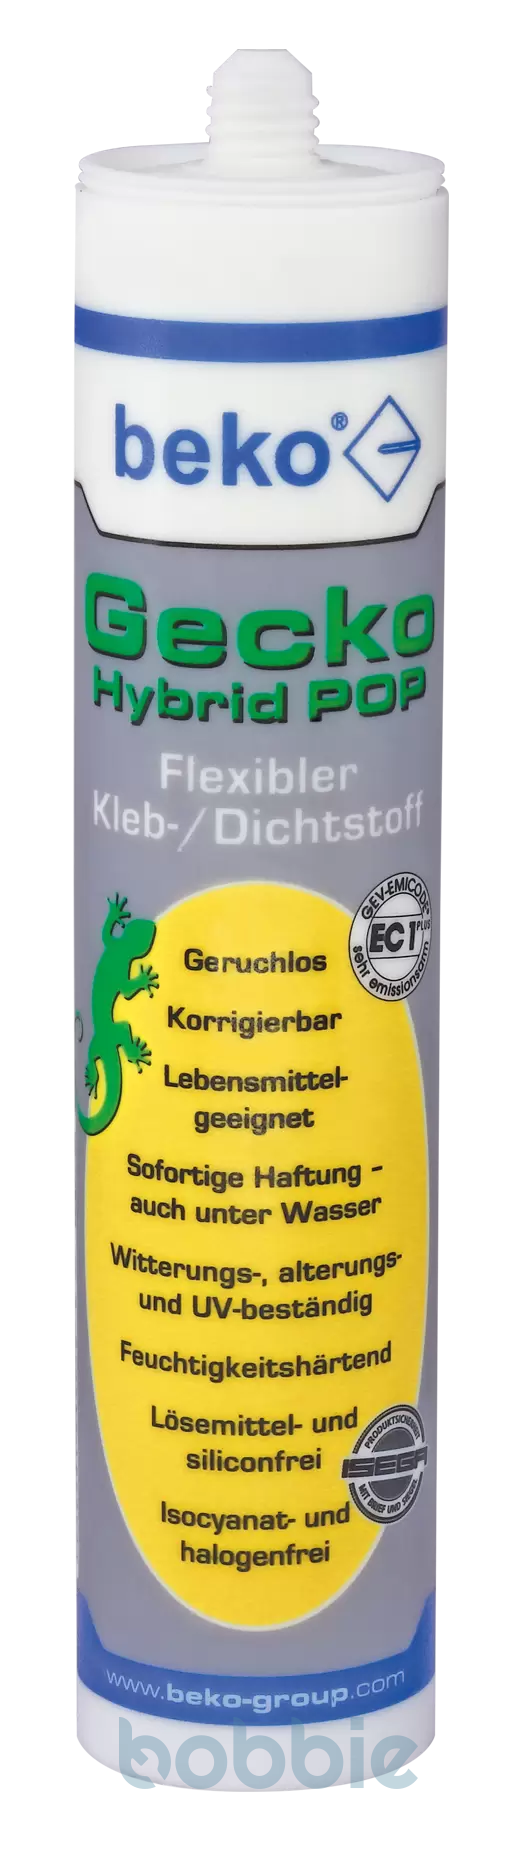 Gecko Hybrid POP 310 ml BEIGE Kleb-/Dichtstoff